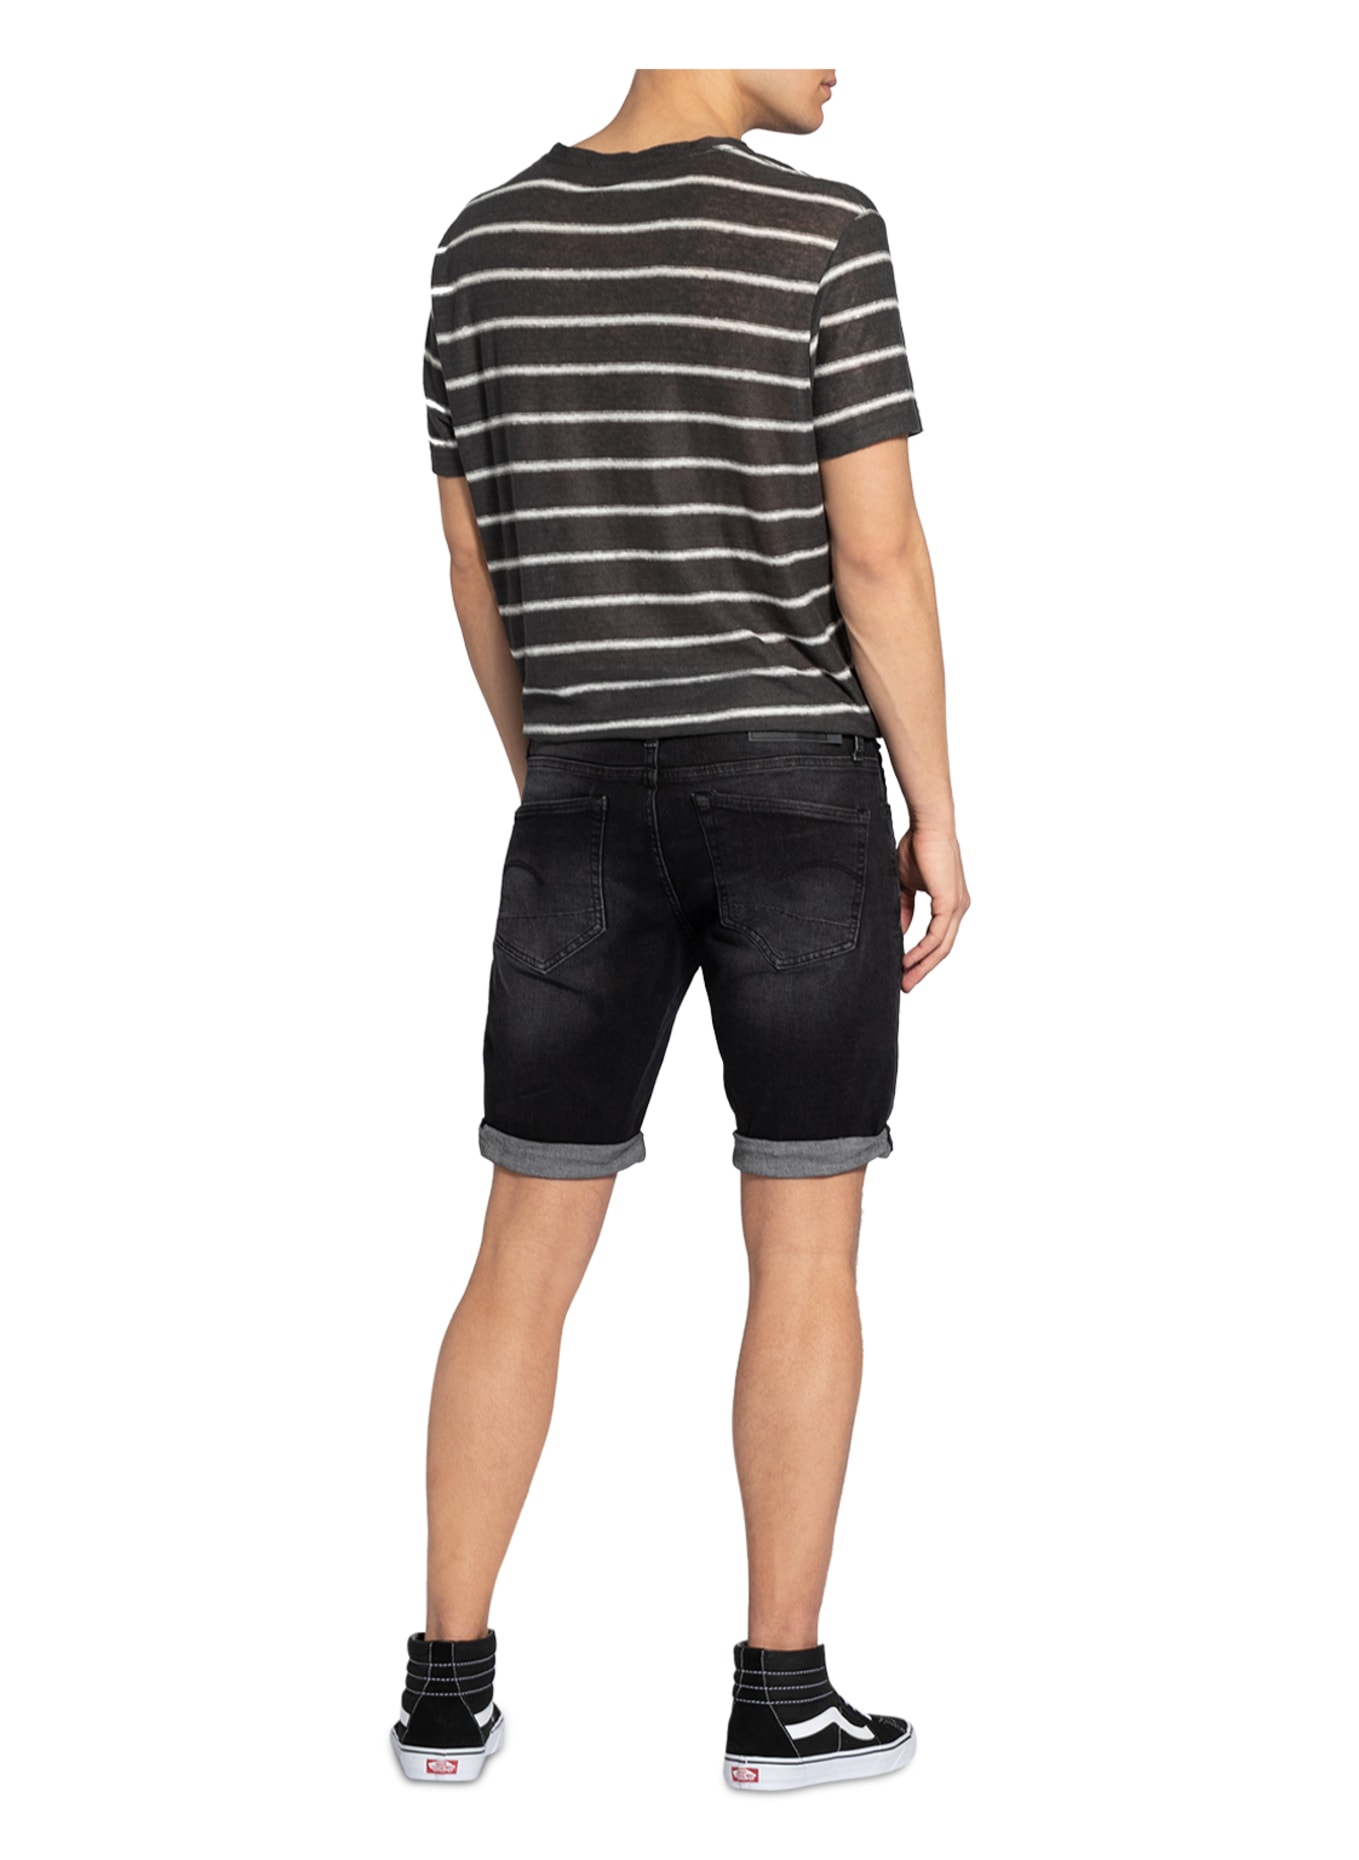 G-Star RAW Denim shorts 3301 slim fit, Color: 9887 Medium Aged Grey (Image 3)